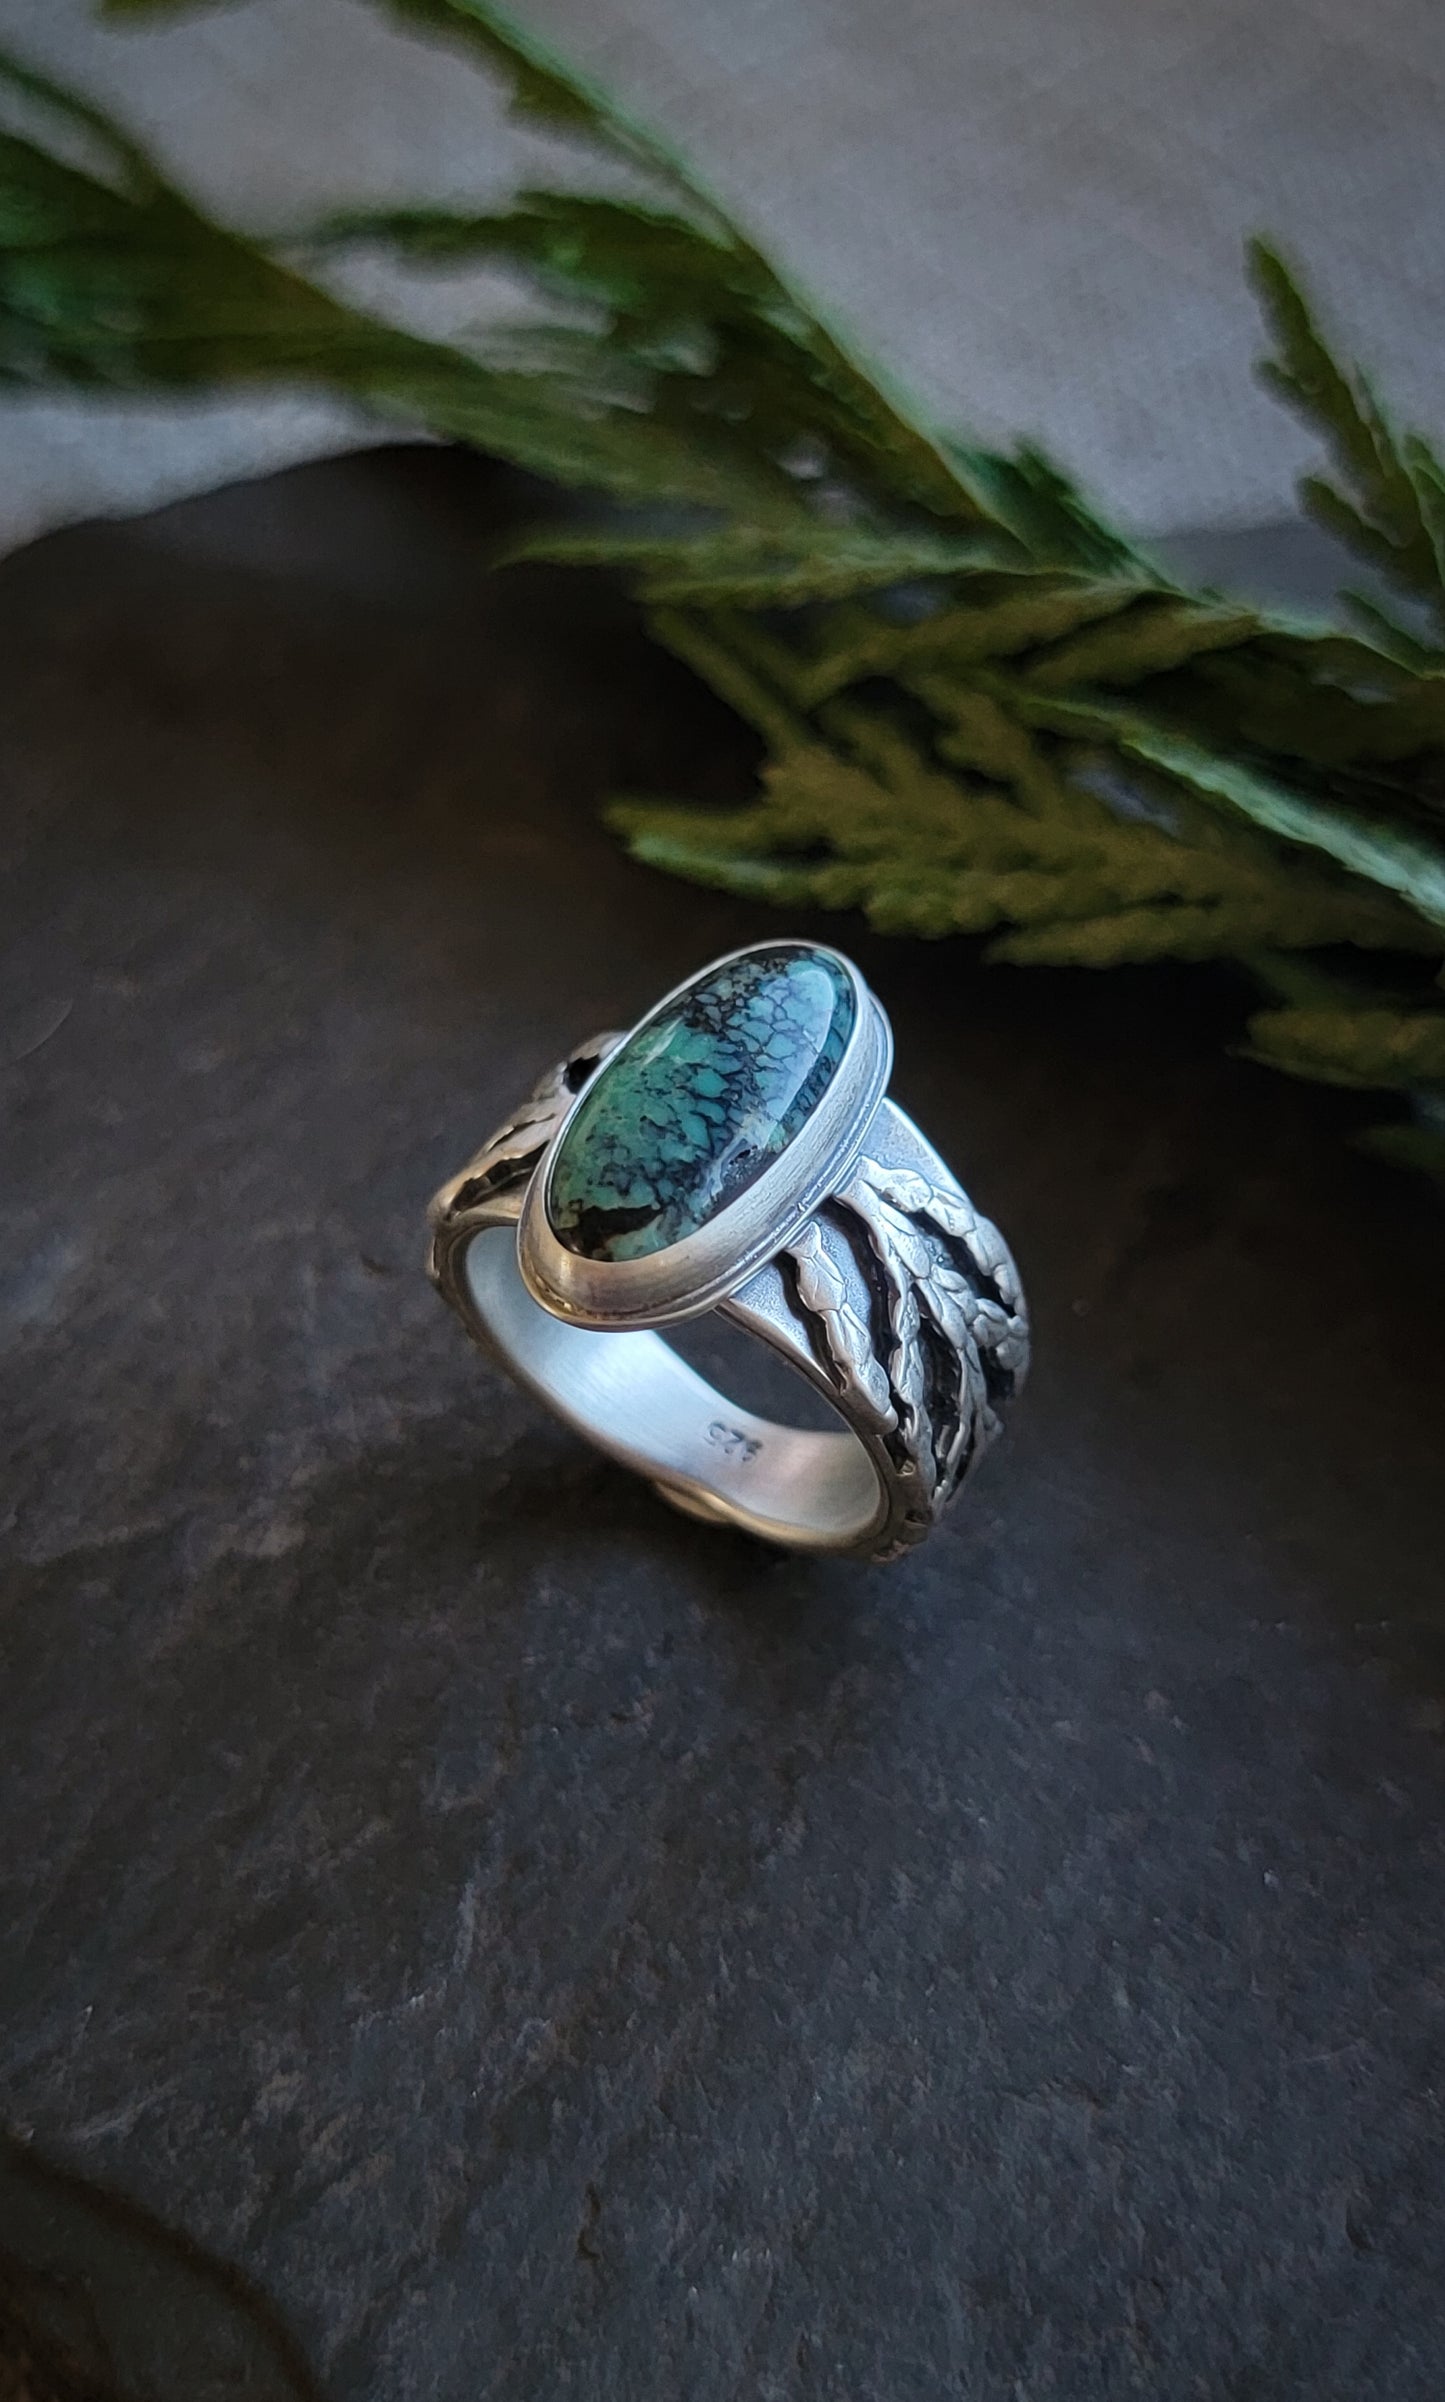 New Lander Turquoise Cedar Ring